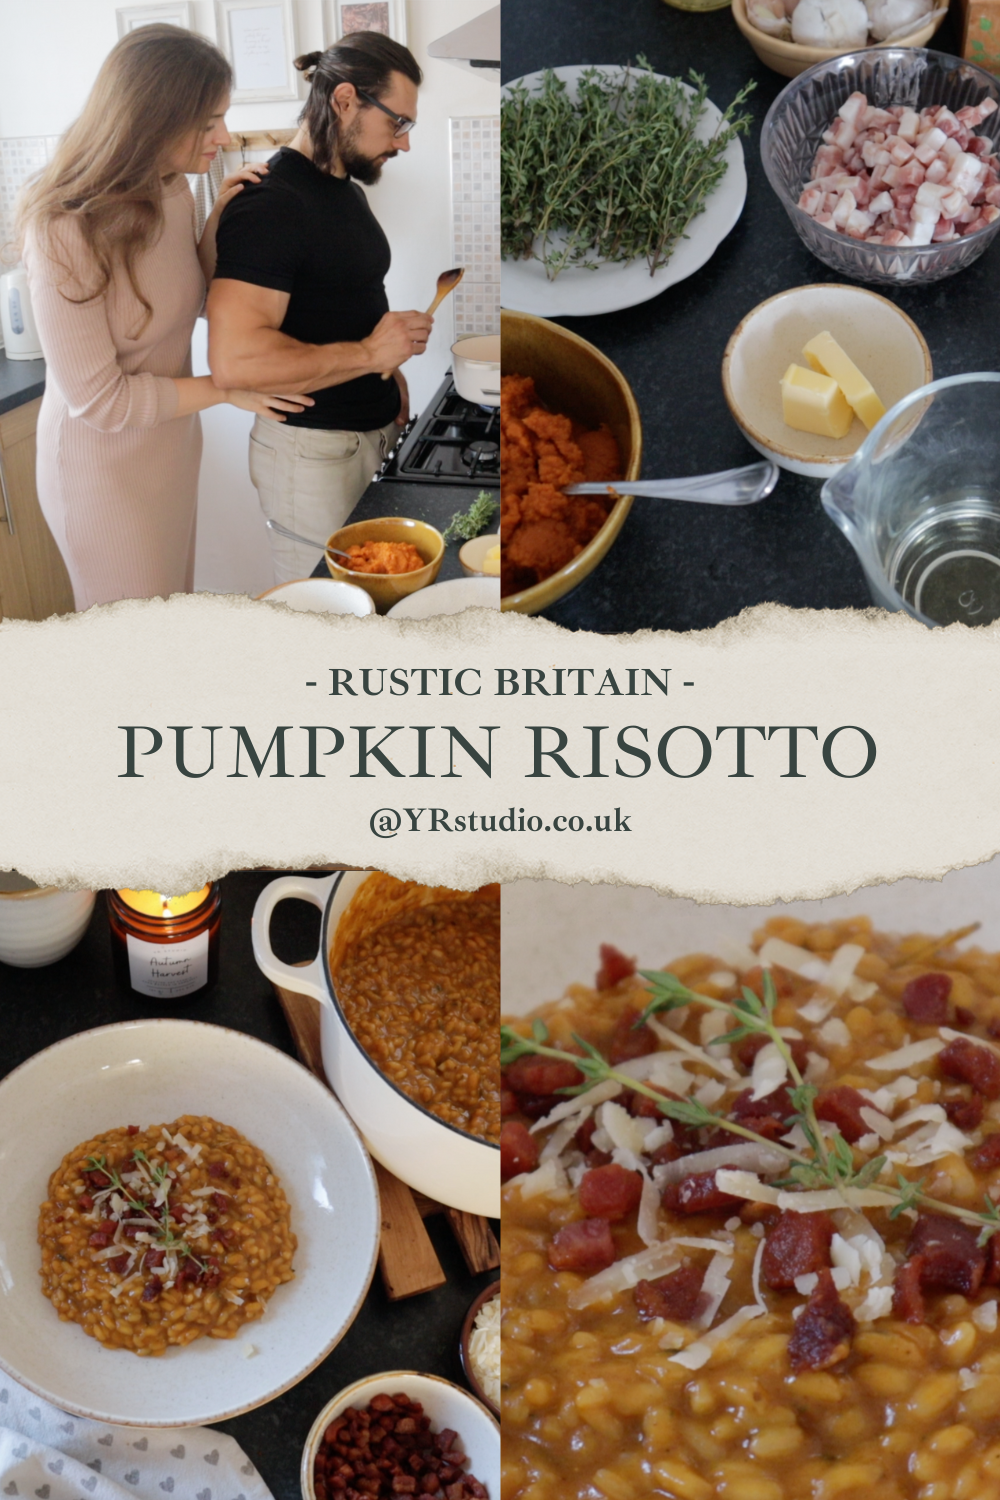 pumpkin risotto - Rustic Britain blog by YR studio